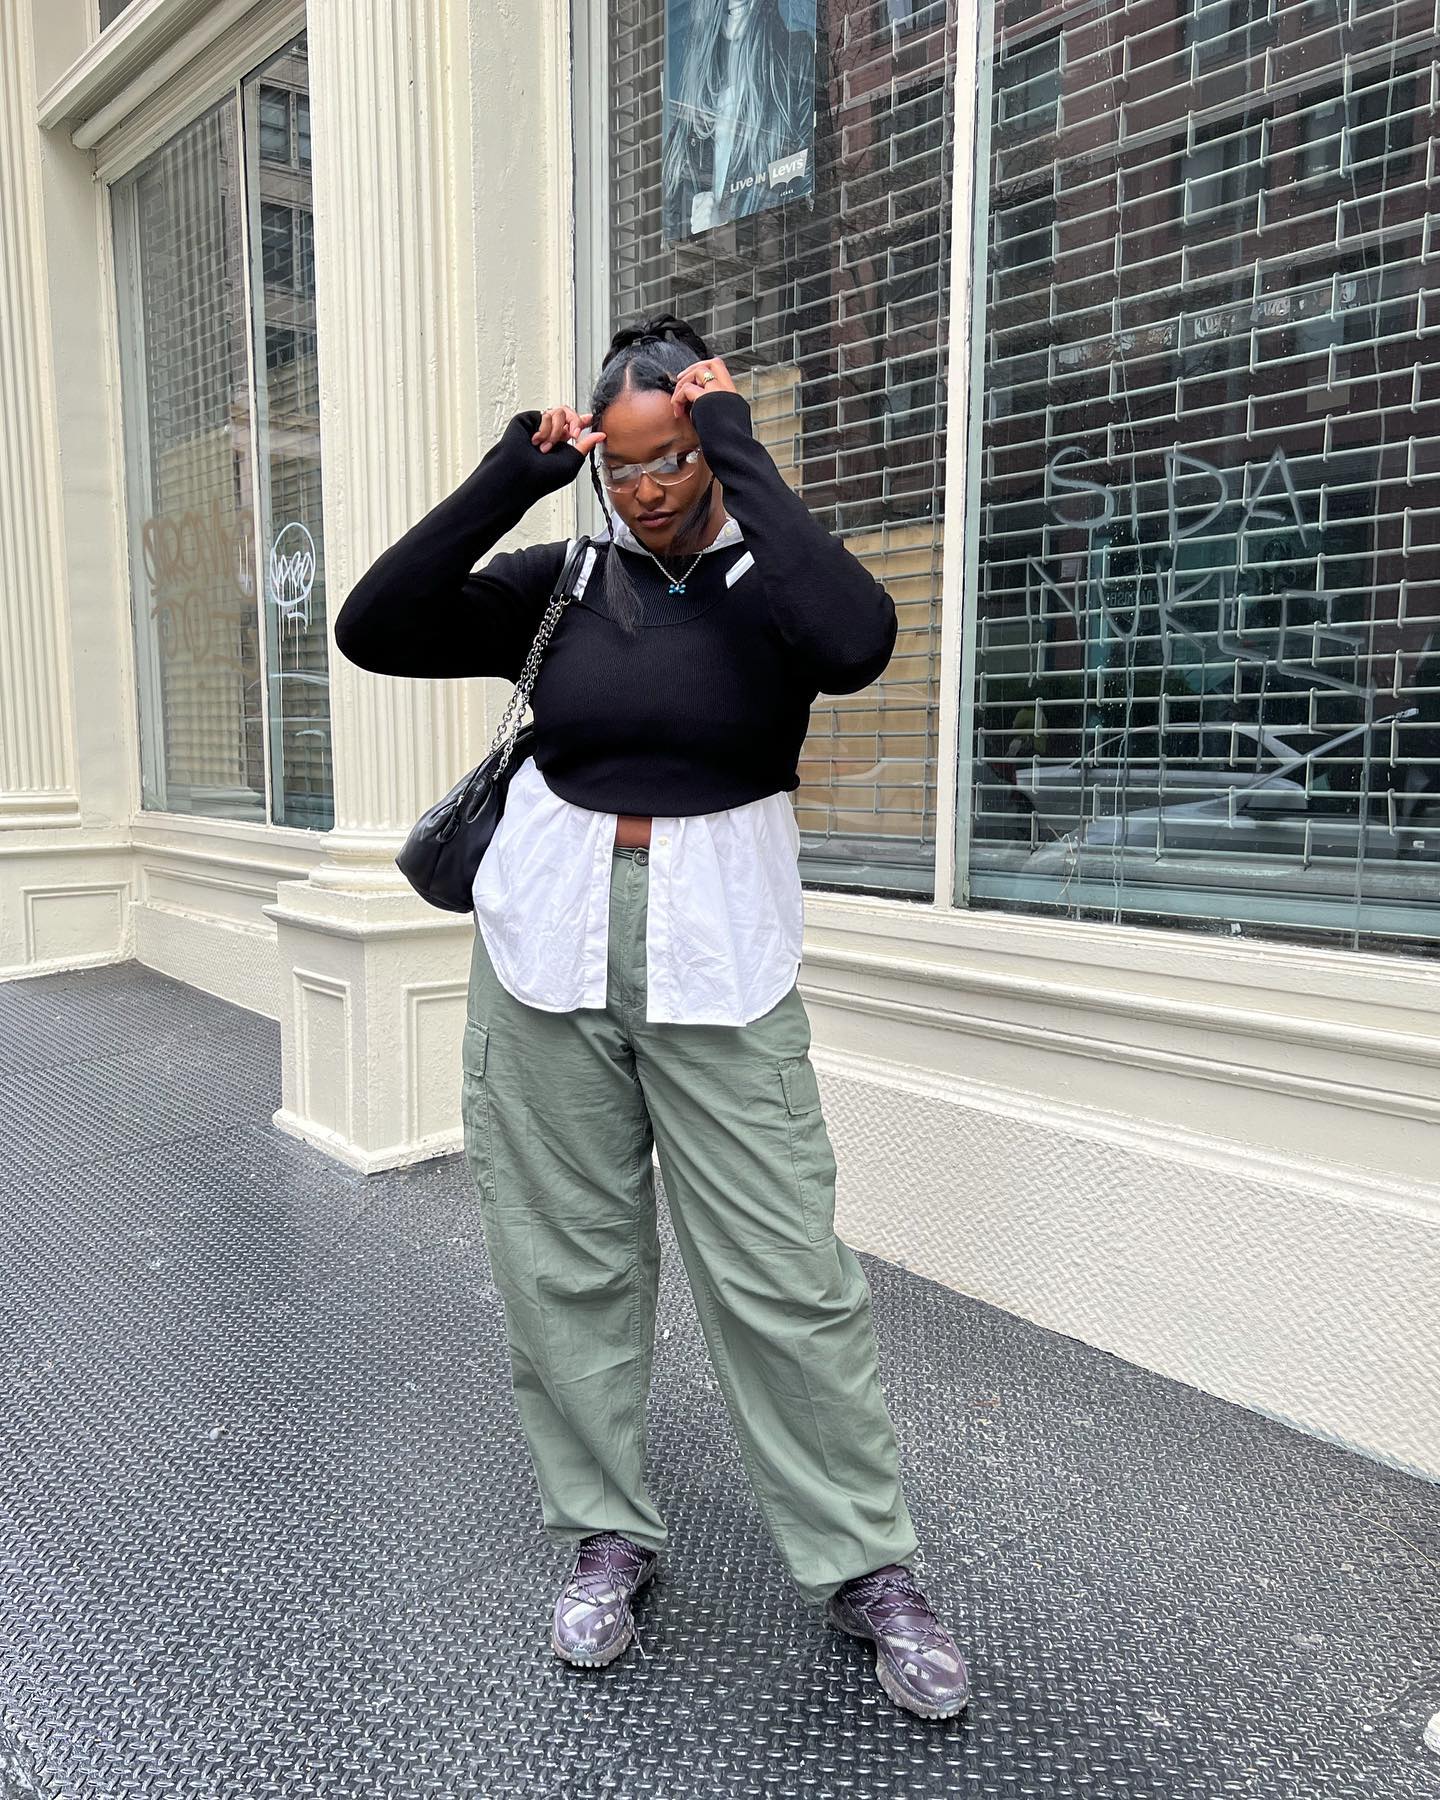 NYC spring fashion staples: cargo pants